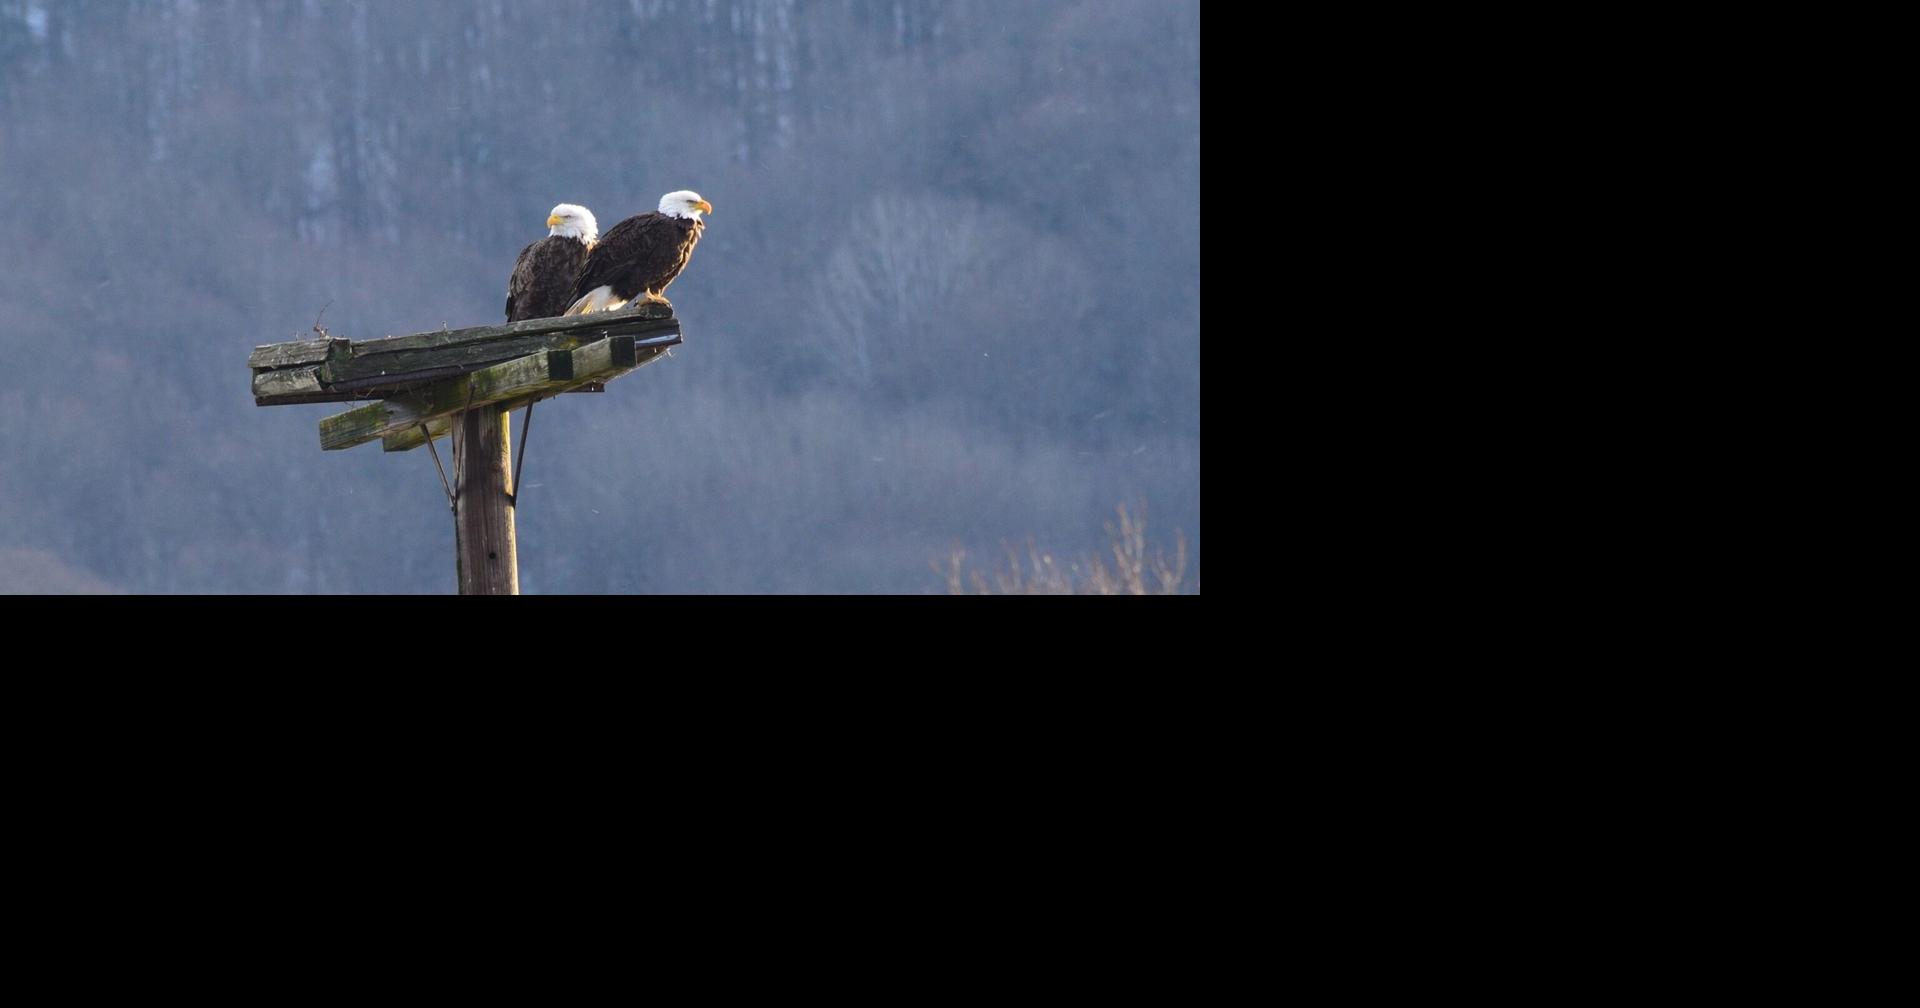 Bald Eagle  Hawk Mountain Sanctuary: Learn Visit Join